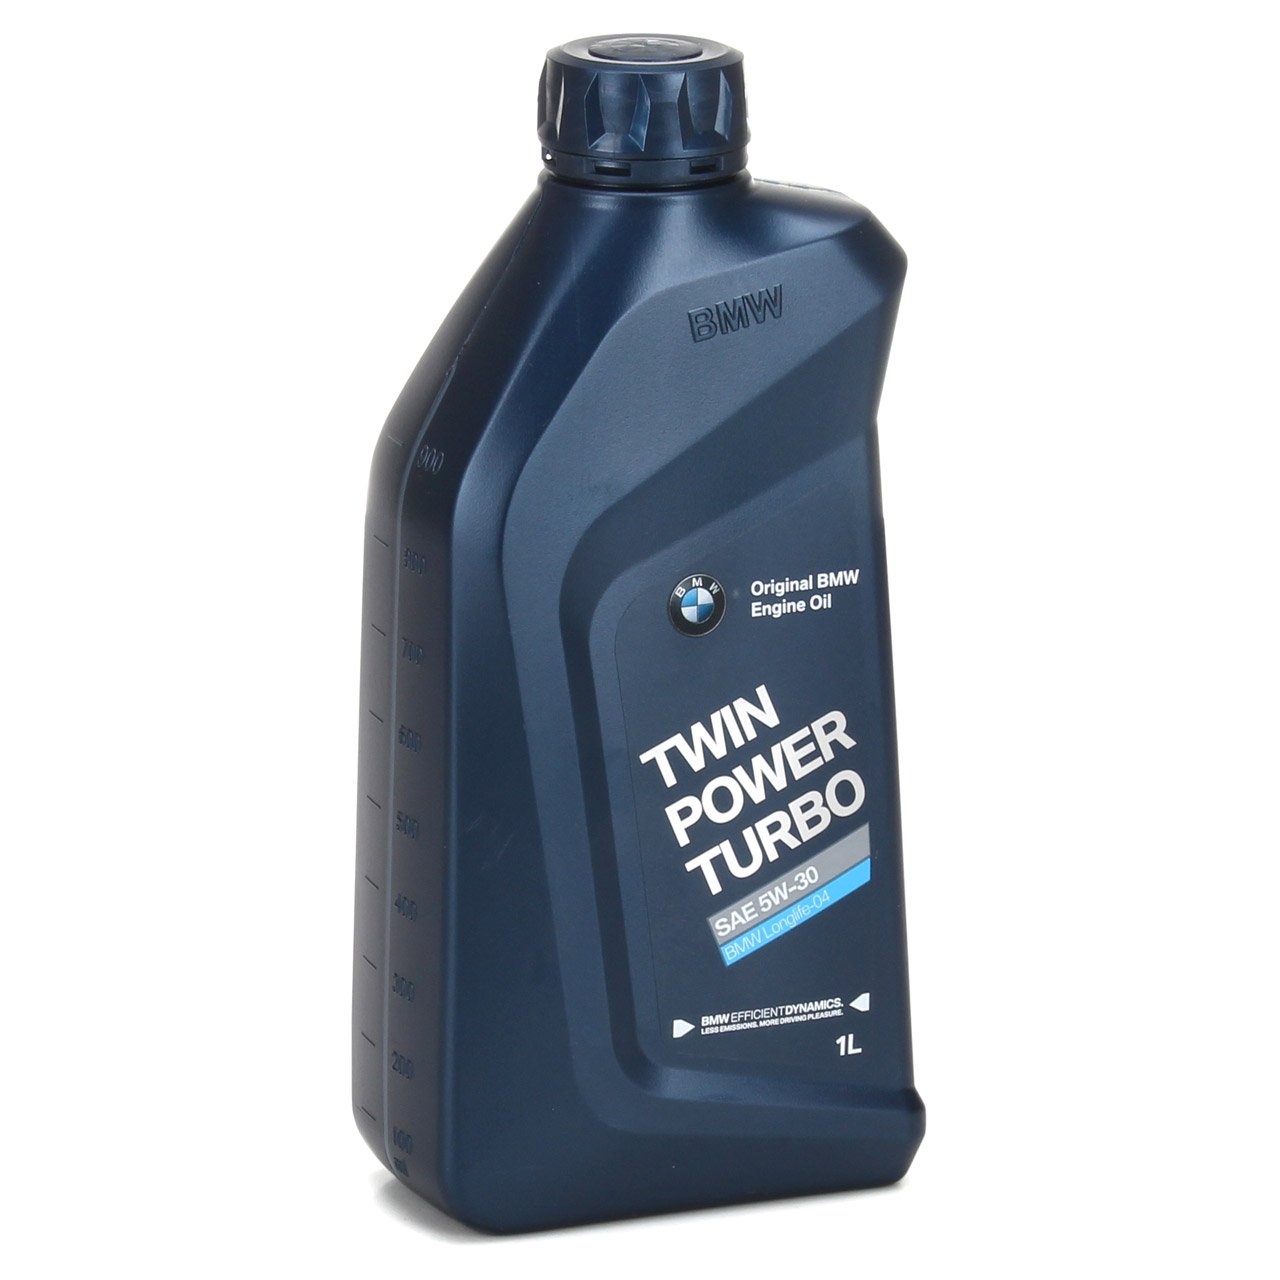 ORIGINAL BMW Motoröl Öl 5W30 LongLife-04 7 Liter + Ölfilter 11428507683